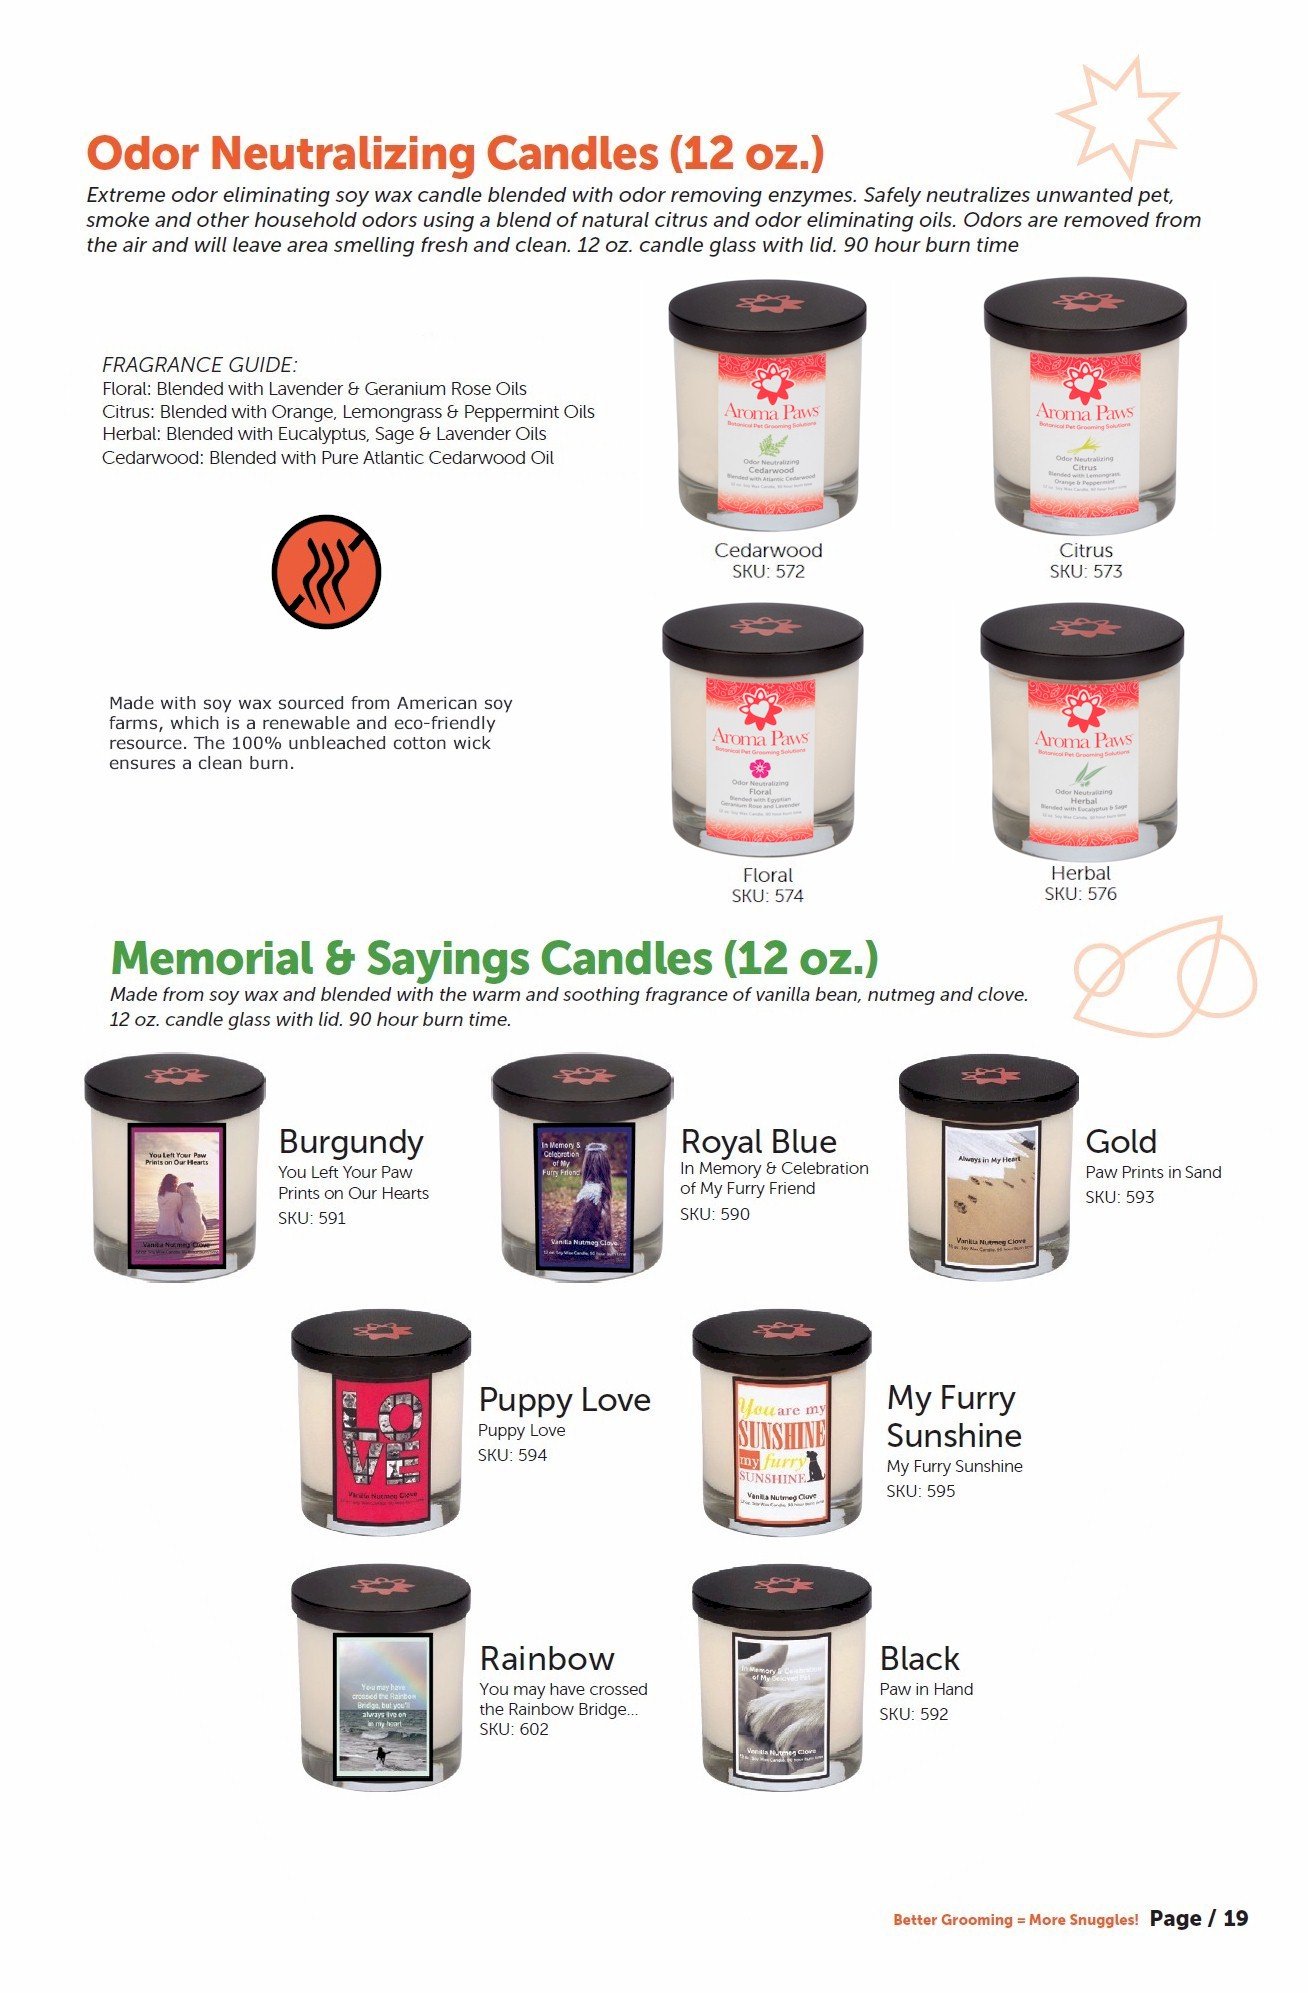 Odor Neutralizing & Memorial Candles